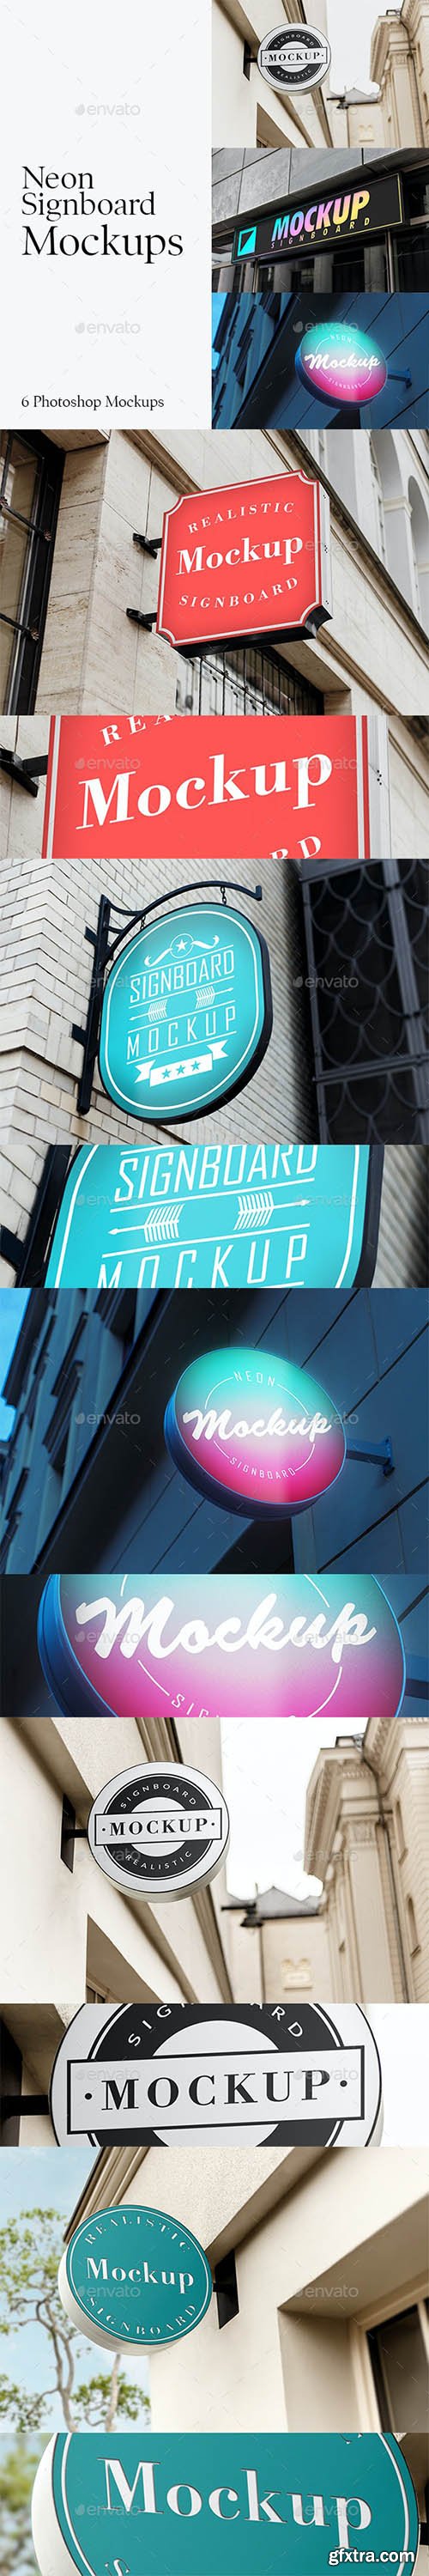 GraphicRiver - 6 Neon Signboard Mockups 28700015